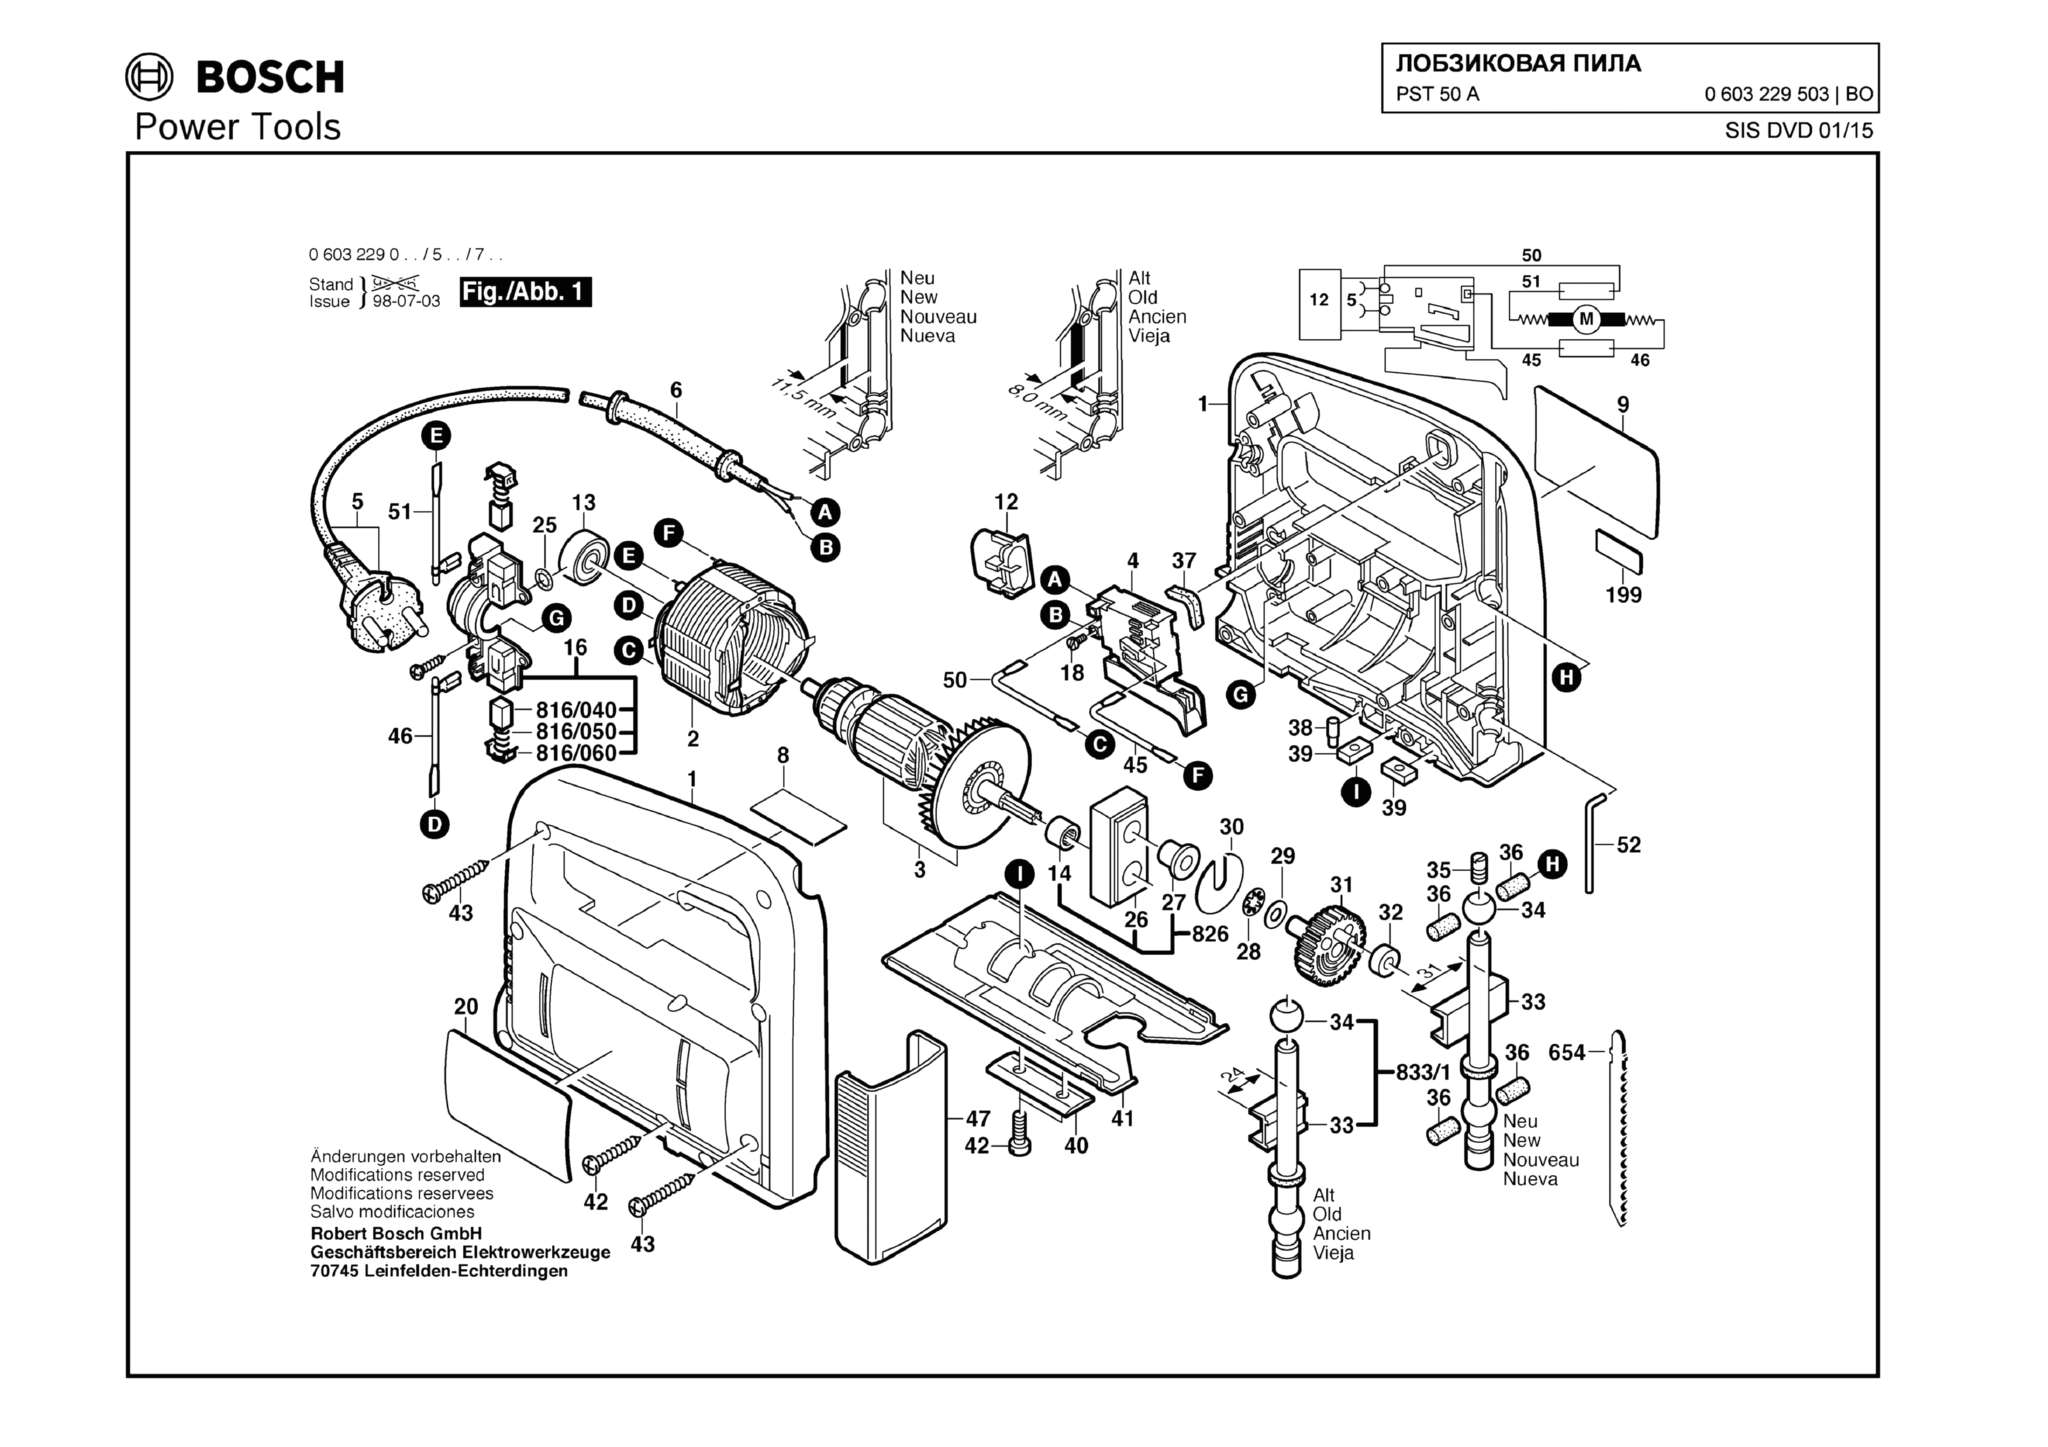 Запчасти, схема и деталировка Bosch PST 50 A (ТИП 603229503)